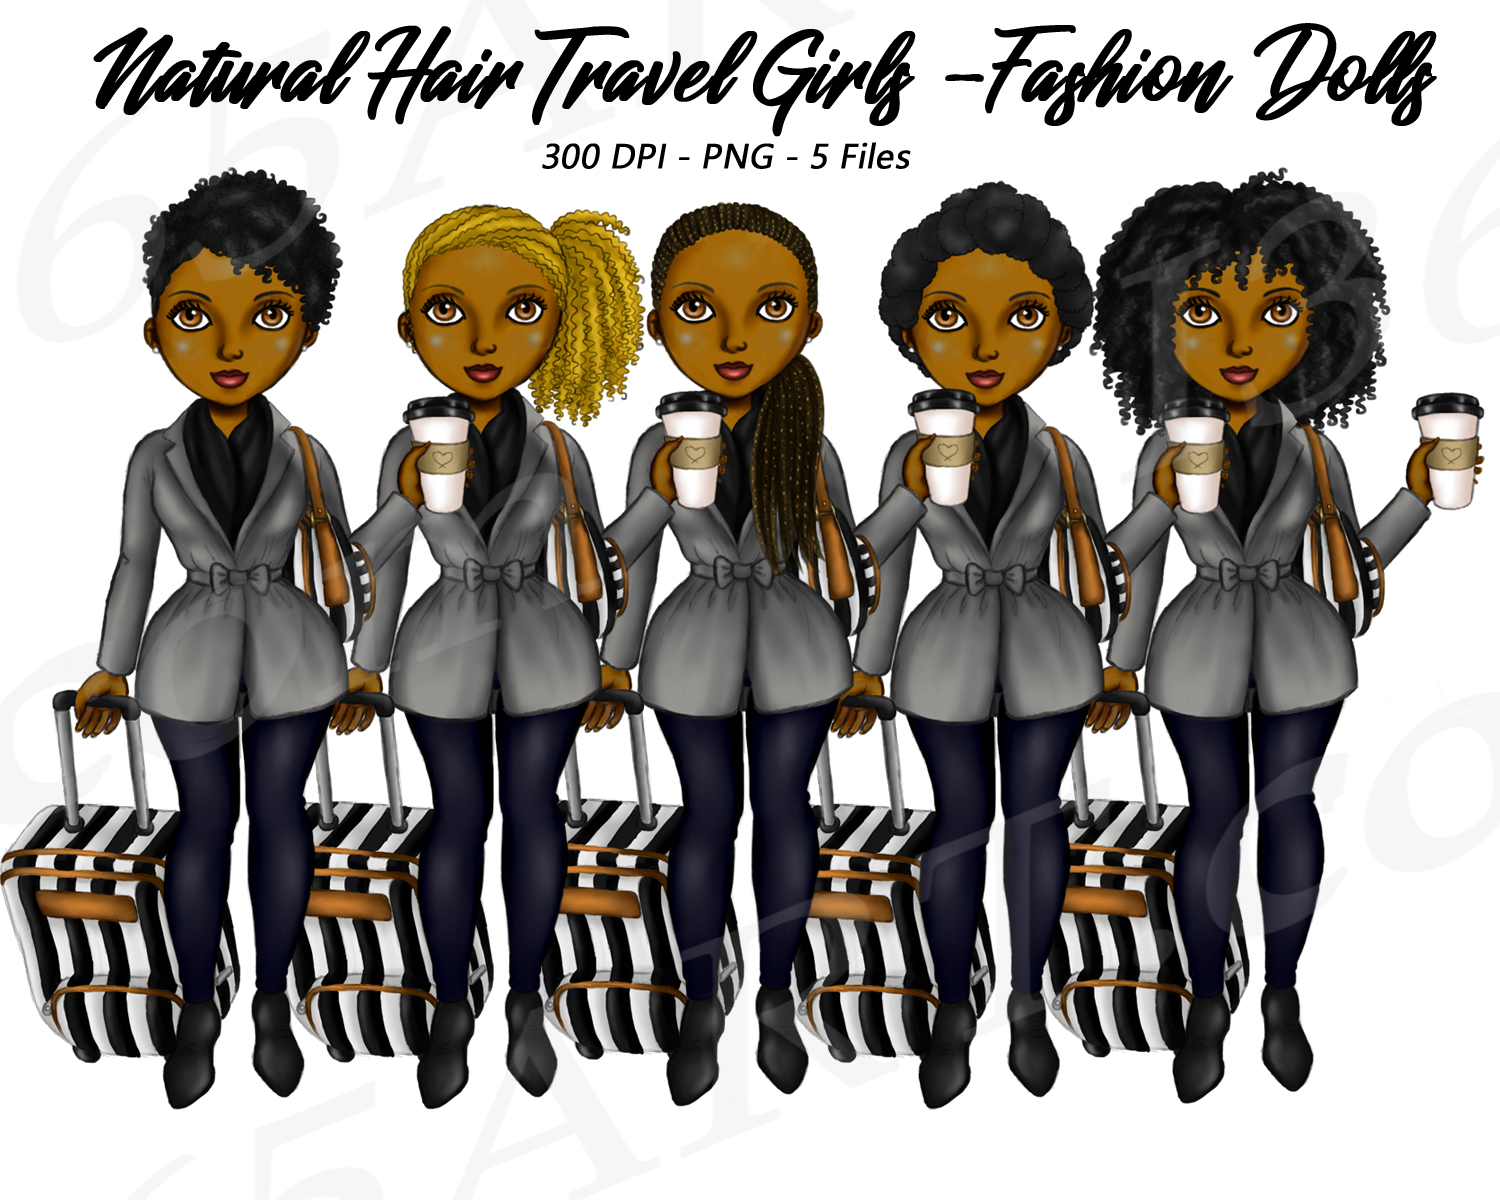 Winter Travel Girls Clipart, Black Girls, Fashion PNG.